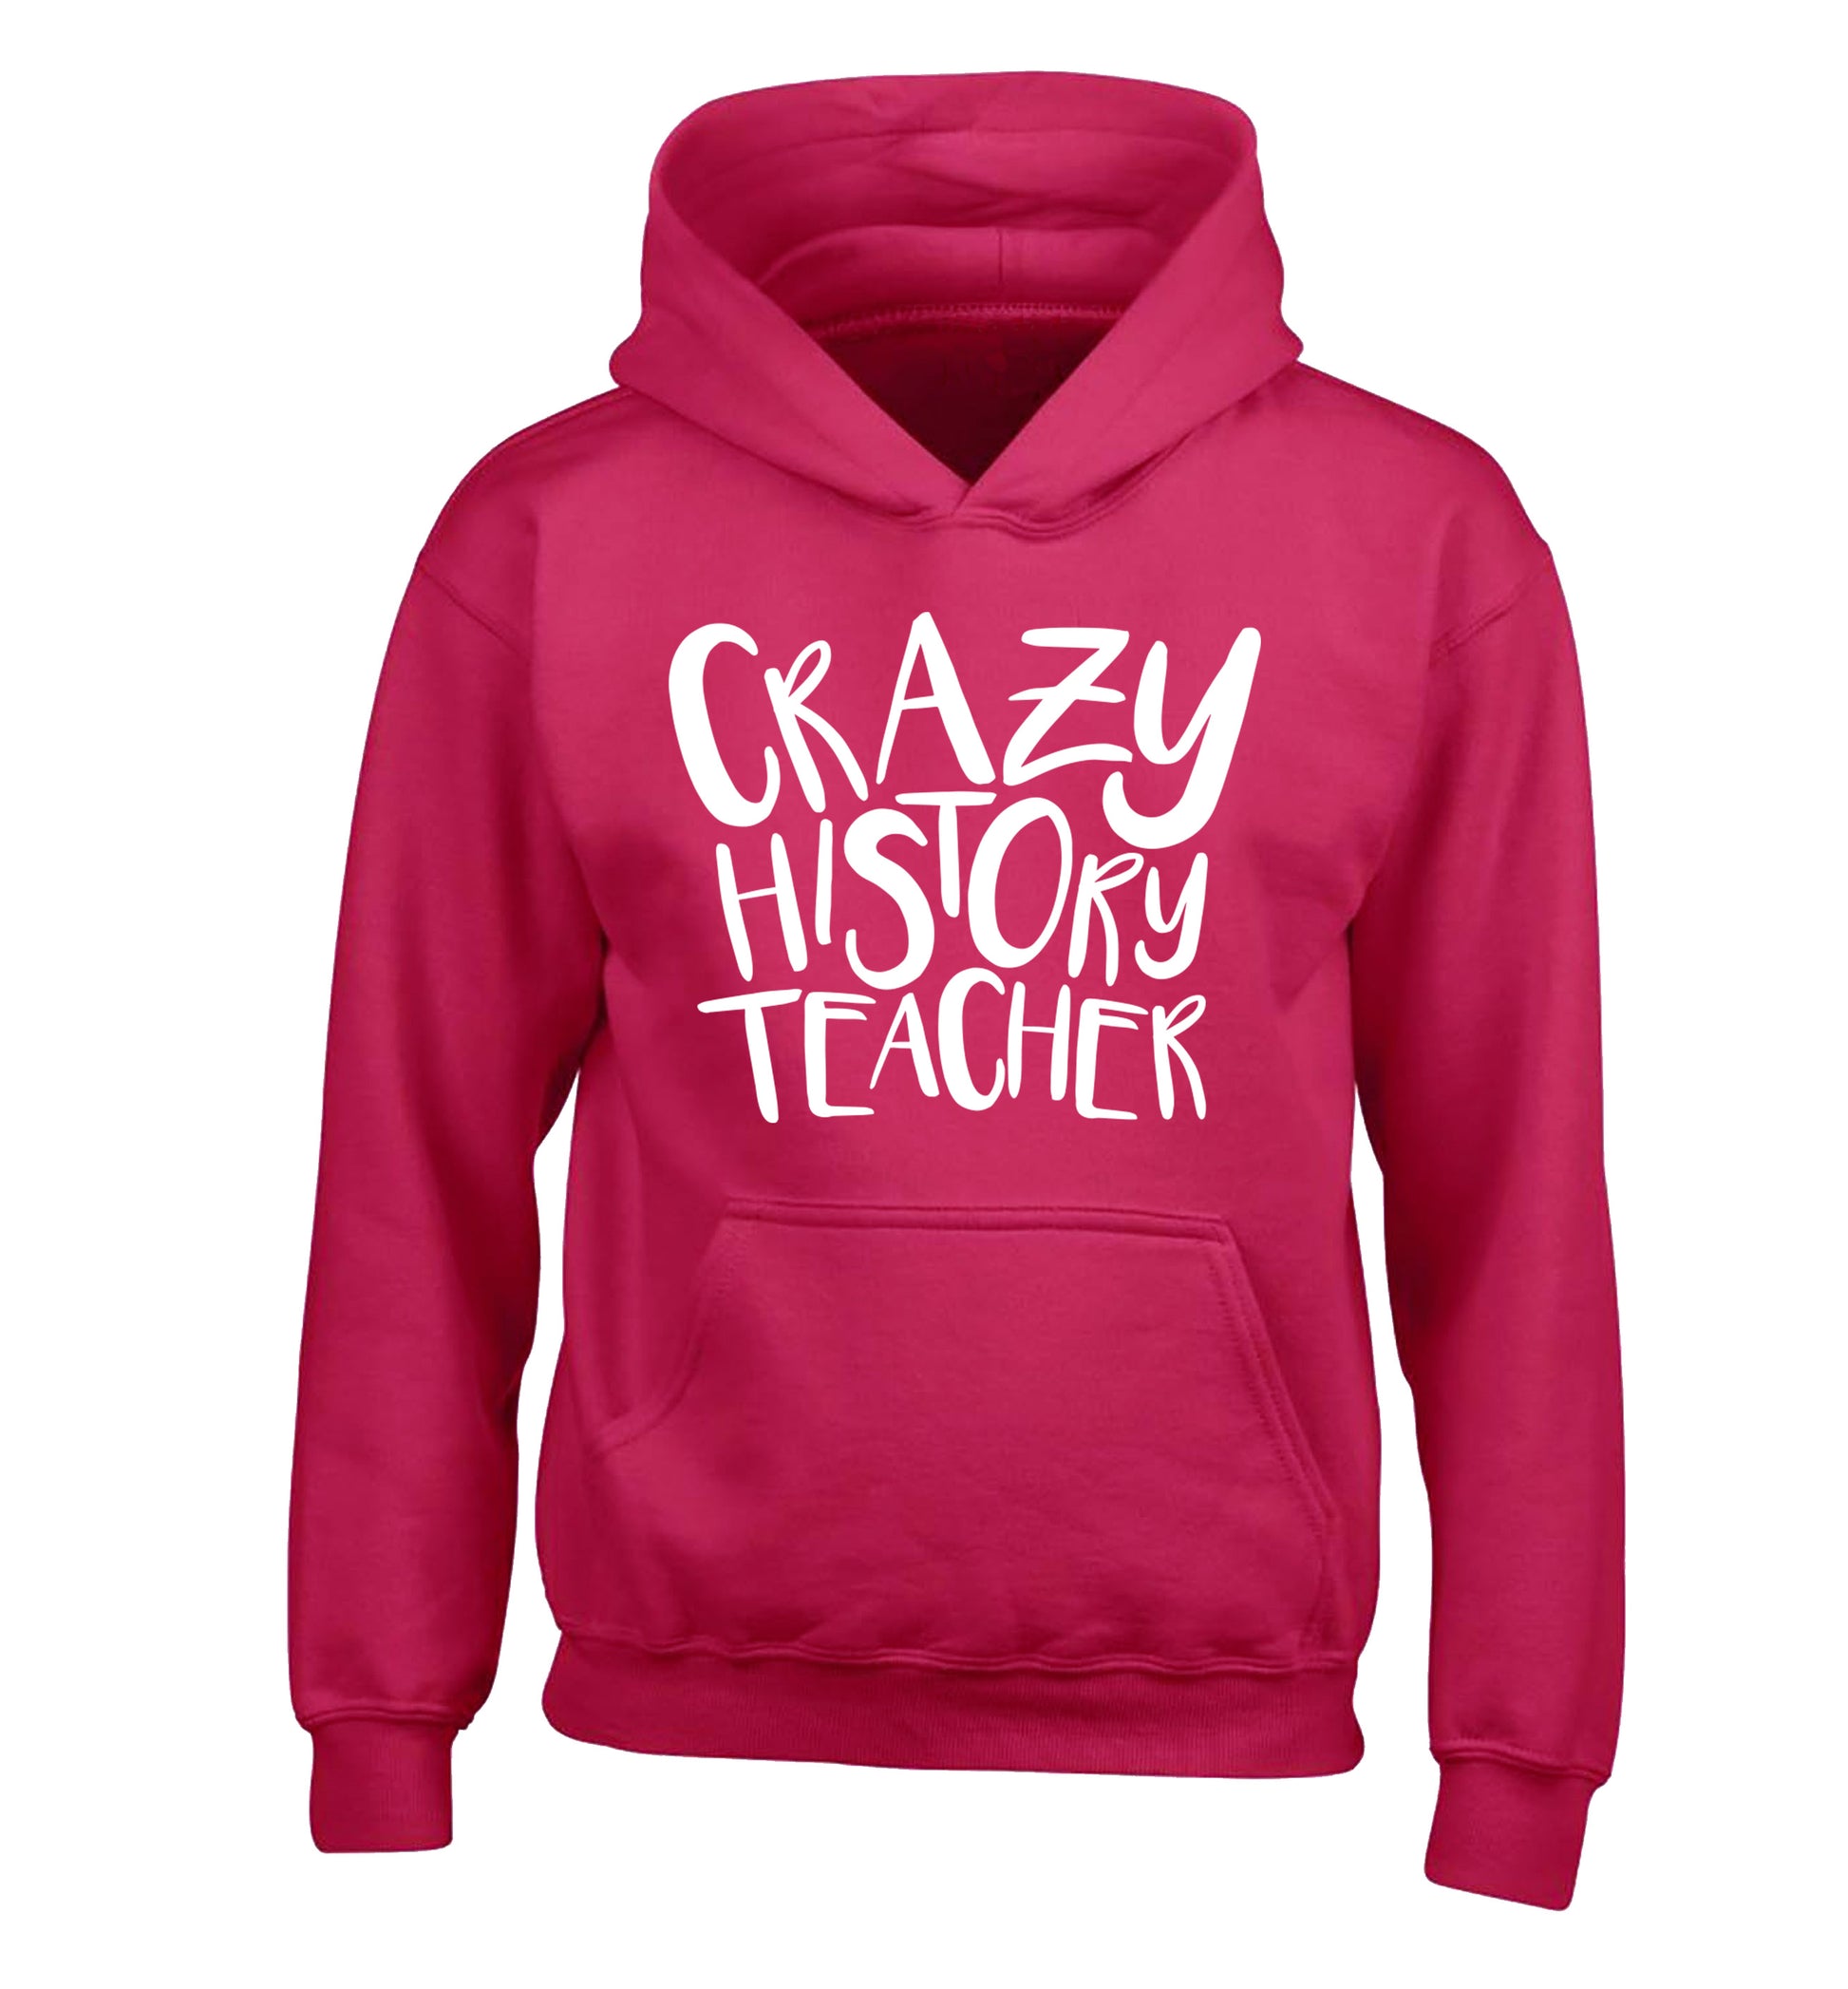 Crazy history teacher children's pink hoodie 12-13 Years